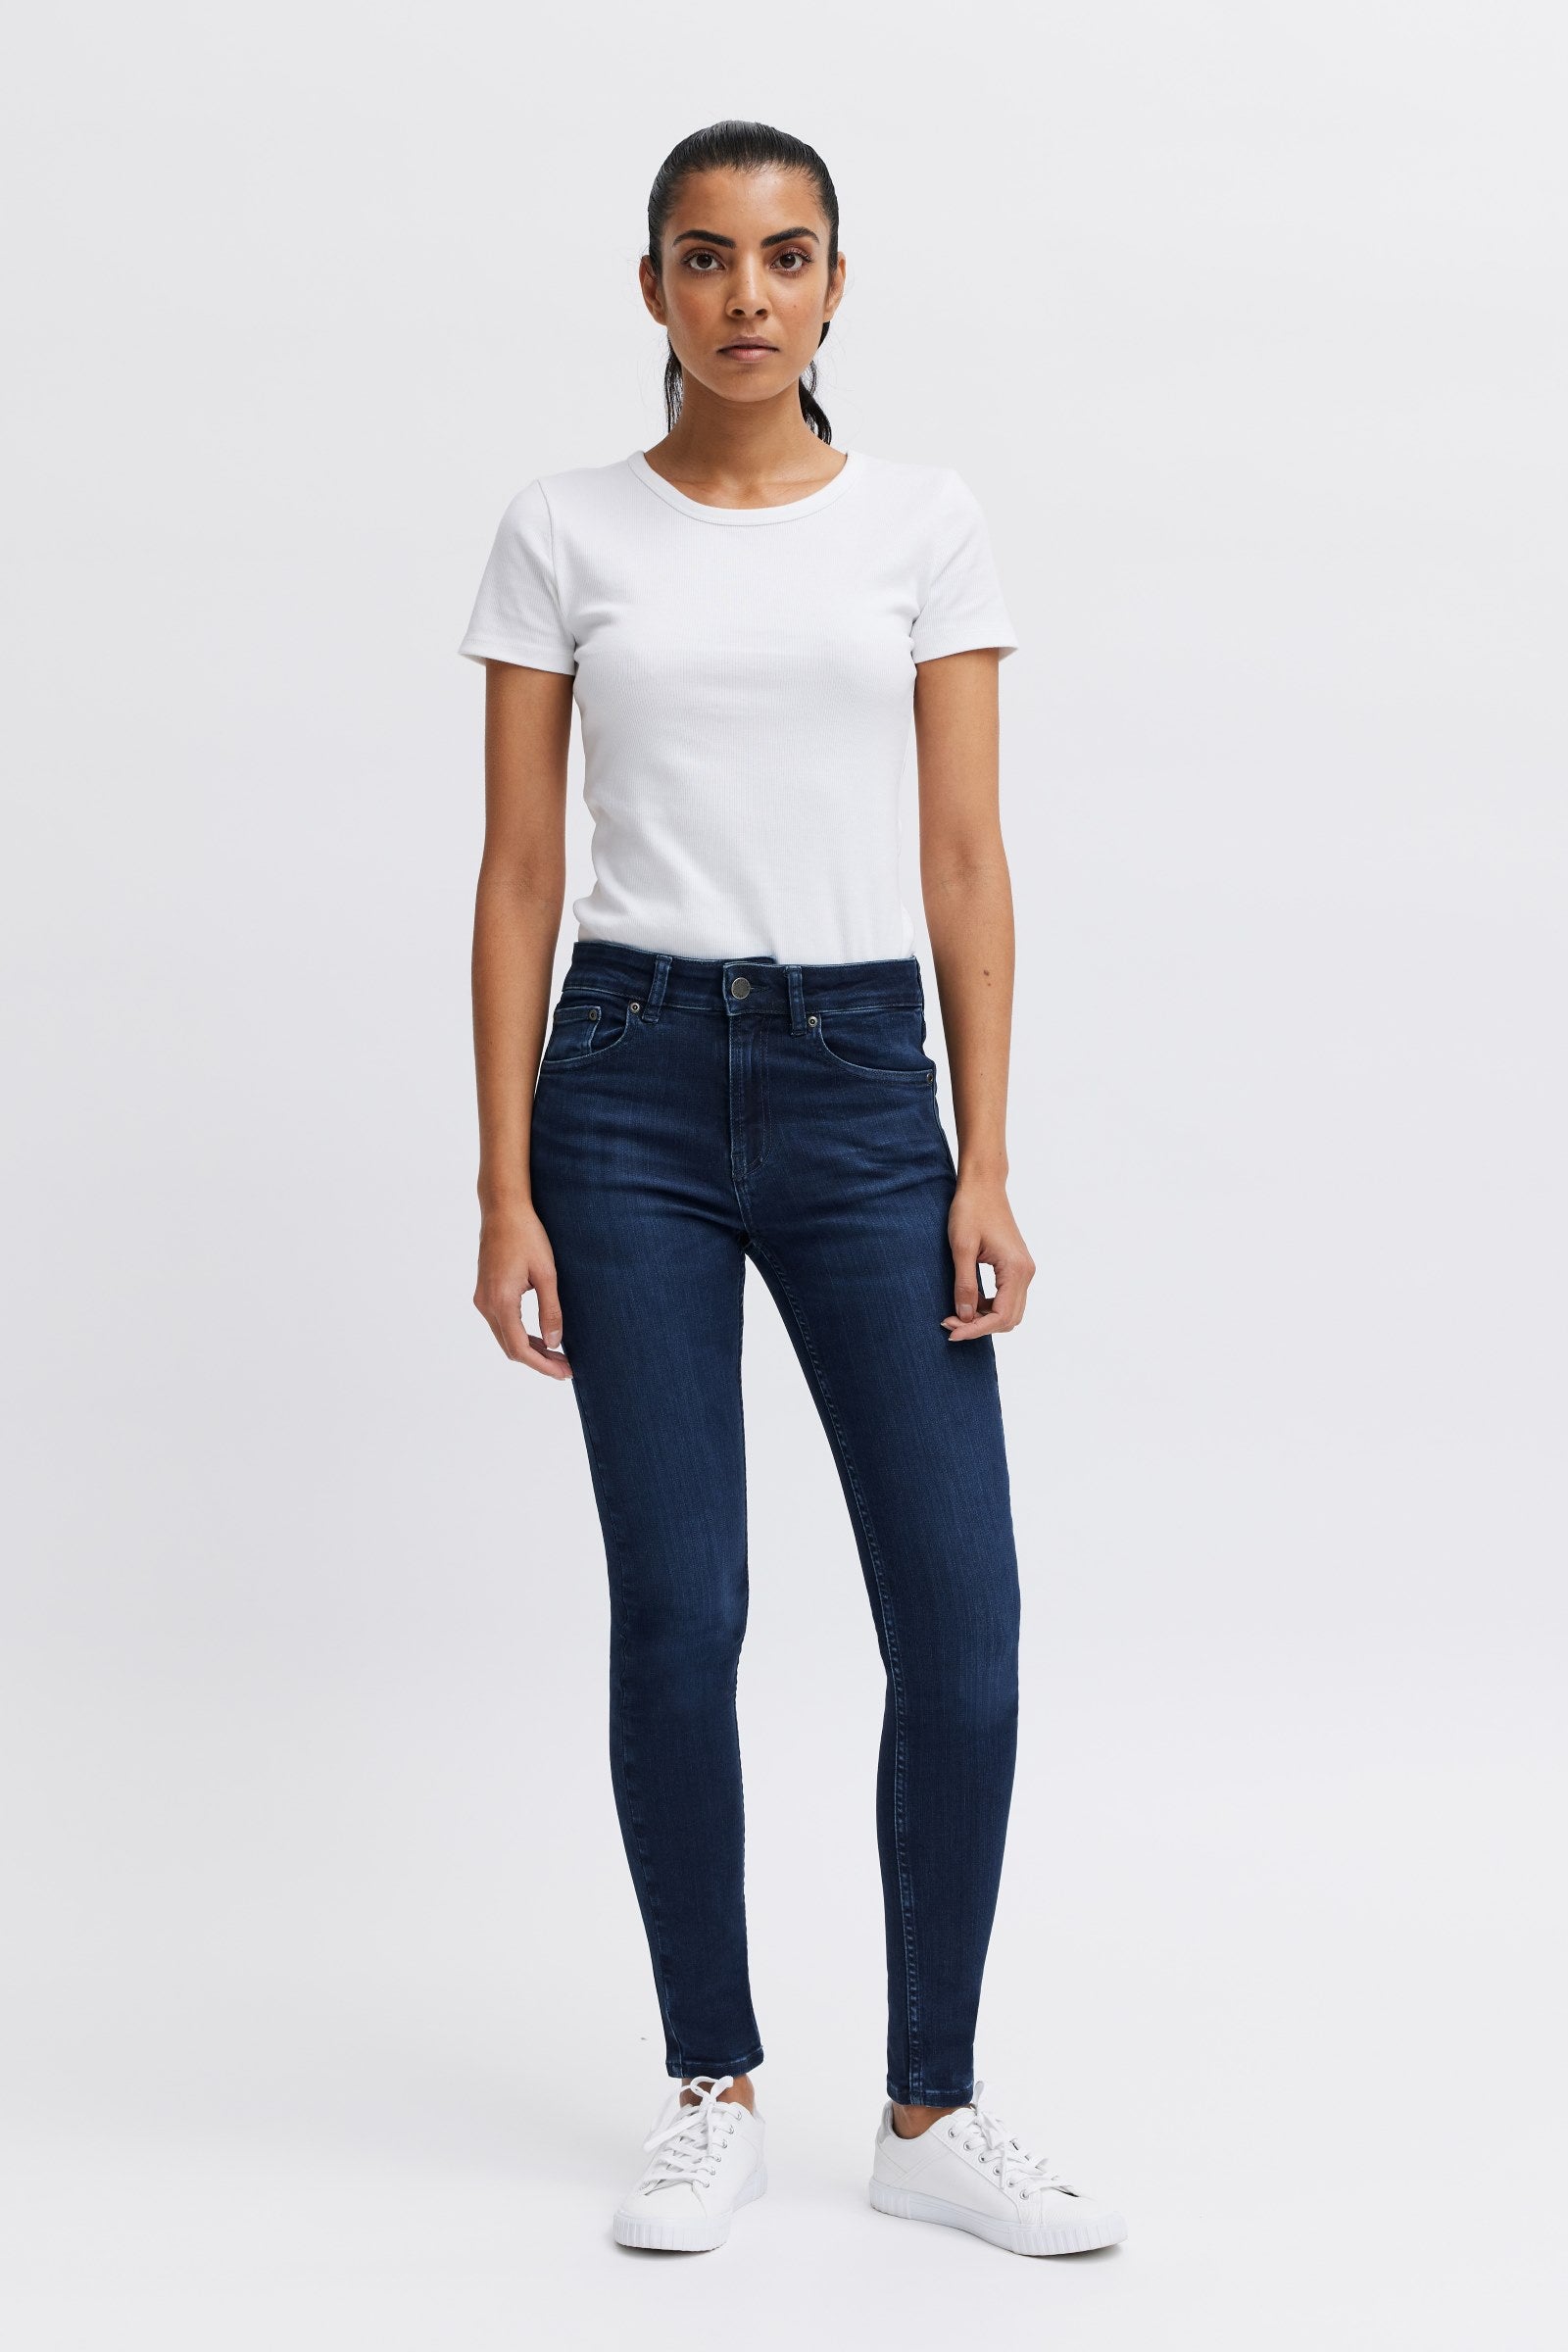 Women's organic skinny jeans - fitting every body type